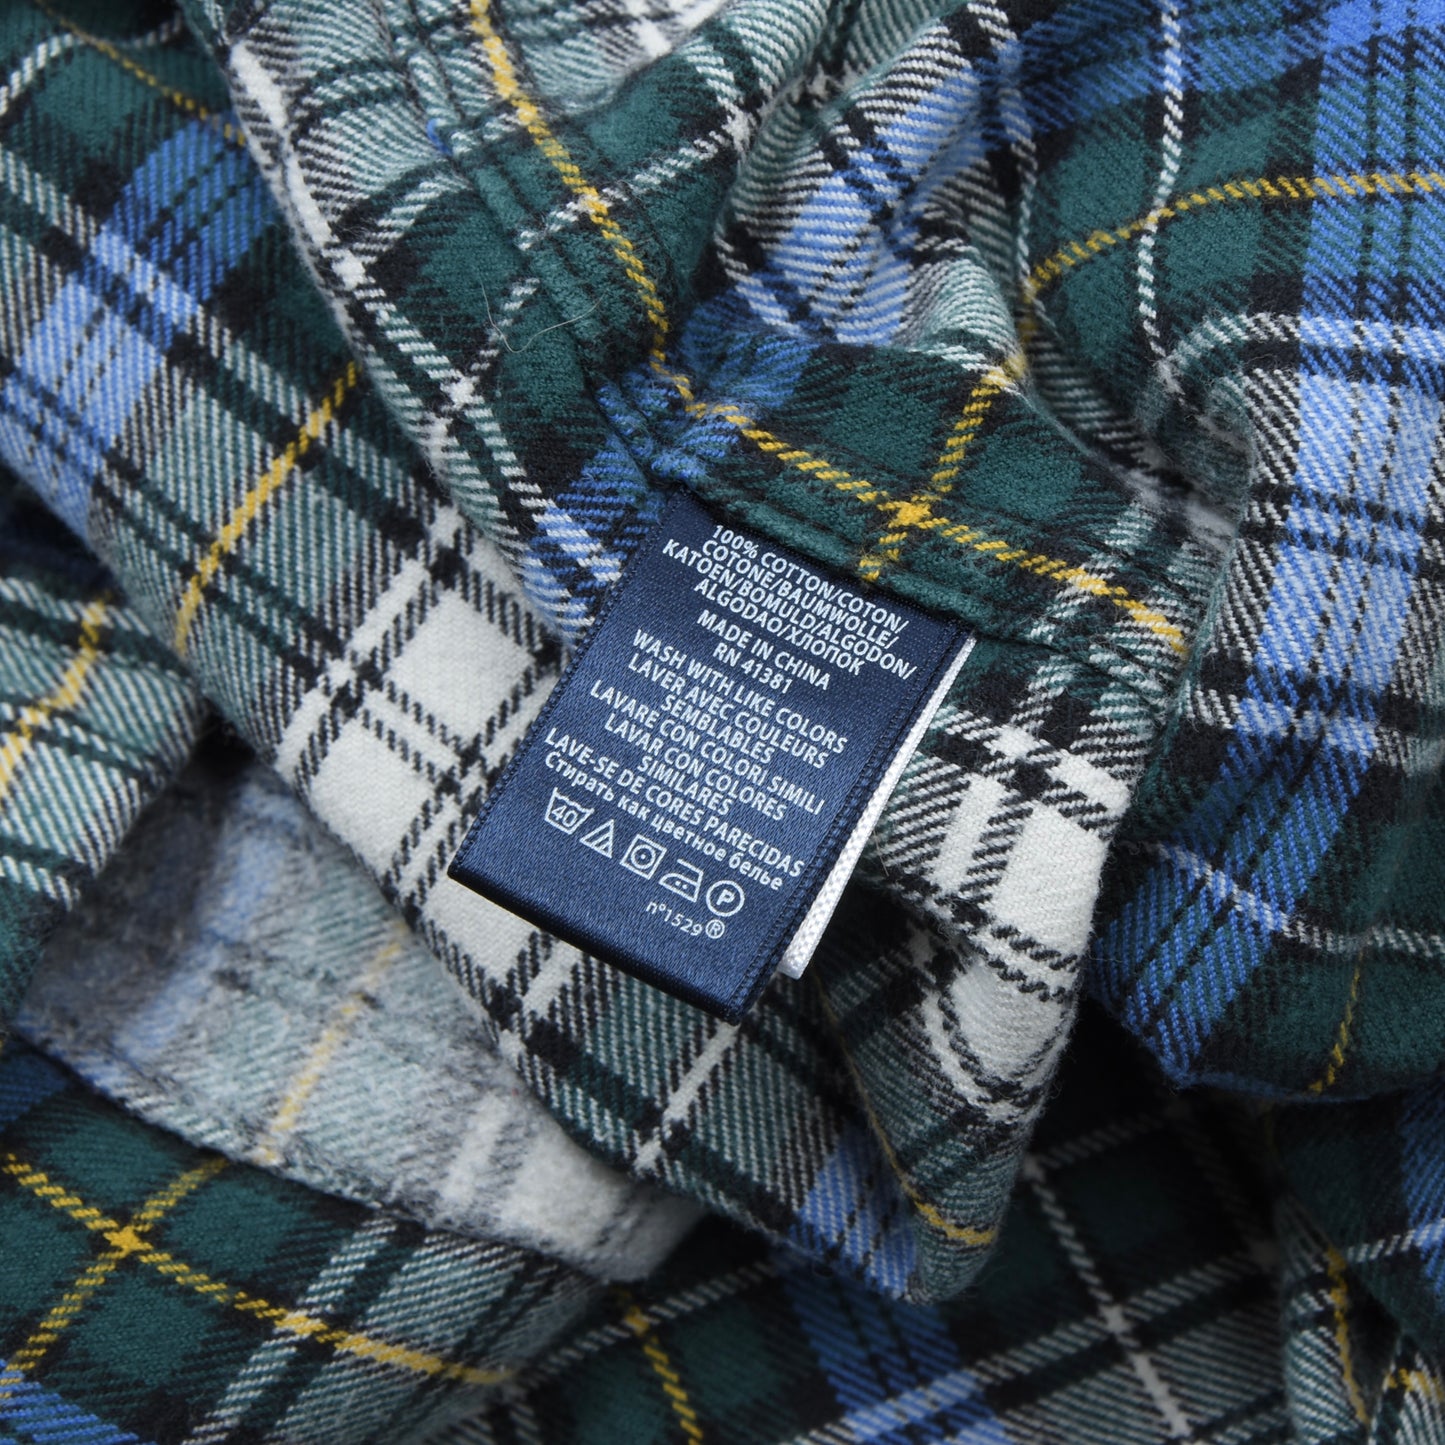 2x Polo Ralph Lauren Cotton Flannel Pyjamas Size L - Tartan